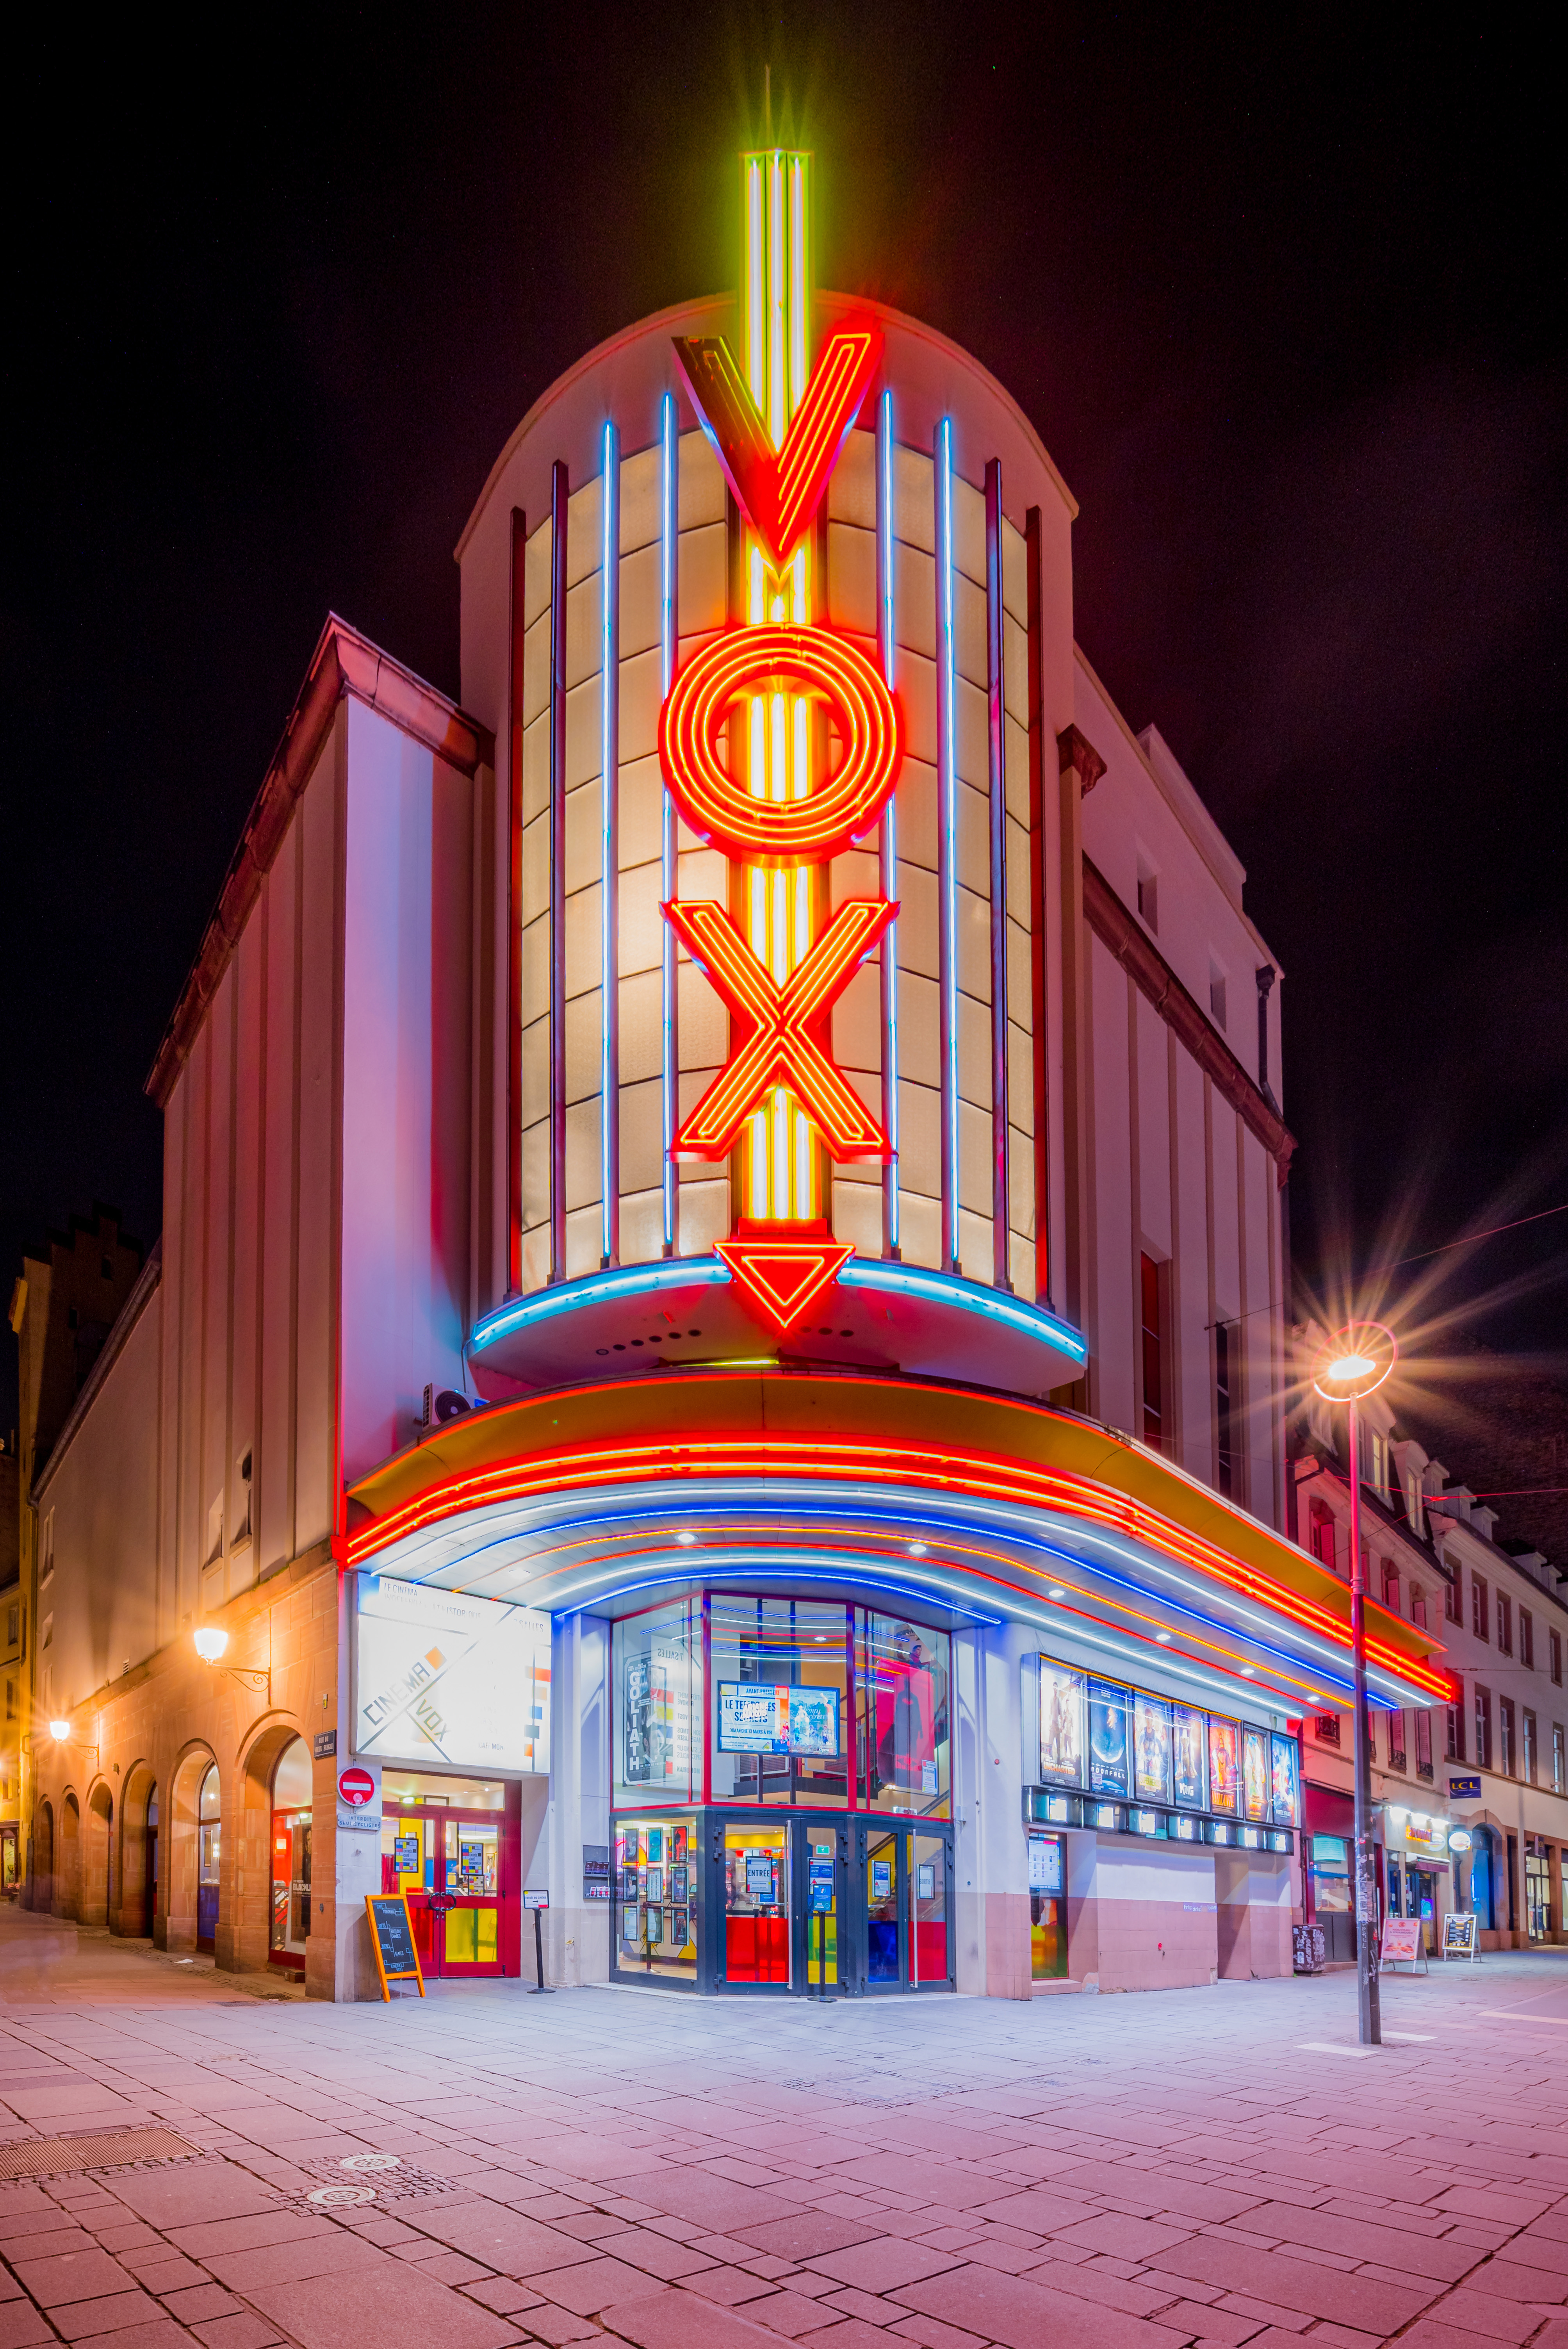 Vox Cinema lights